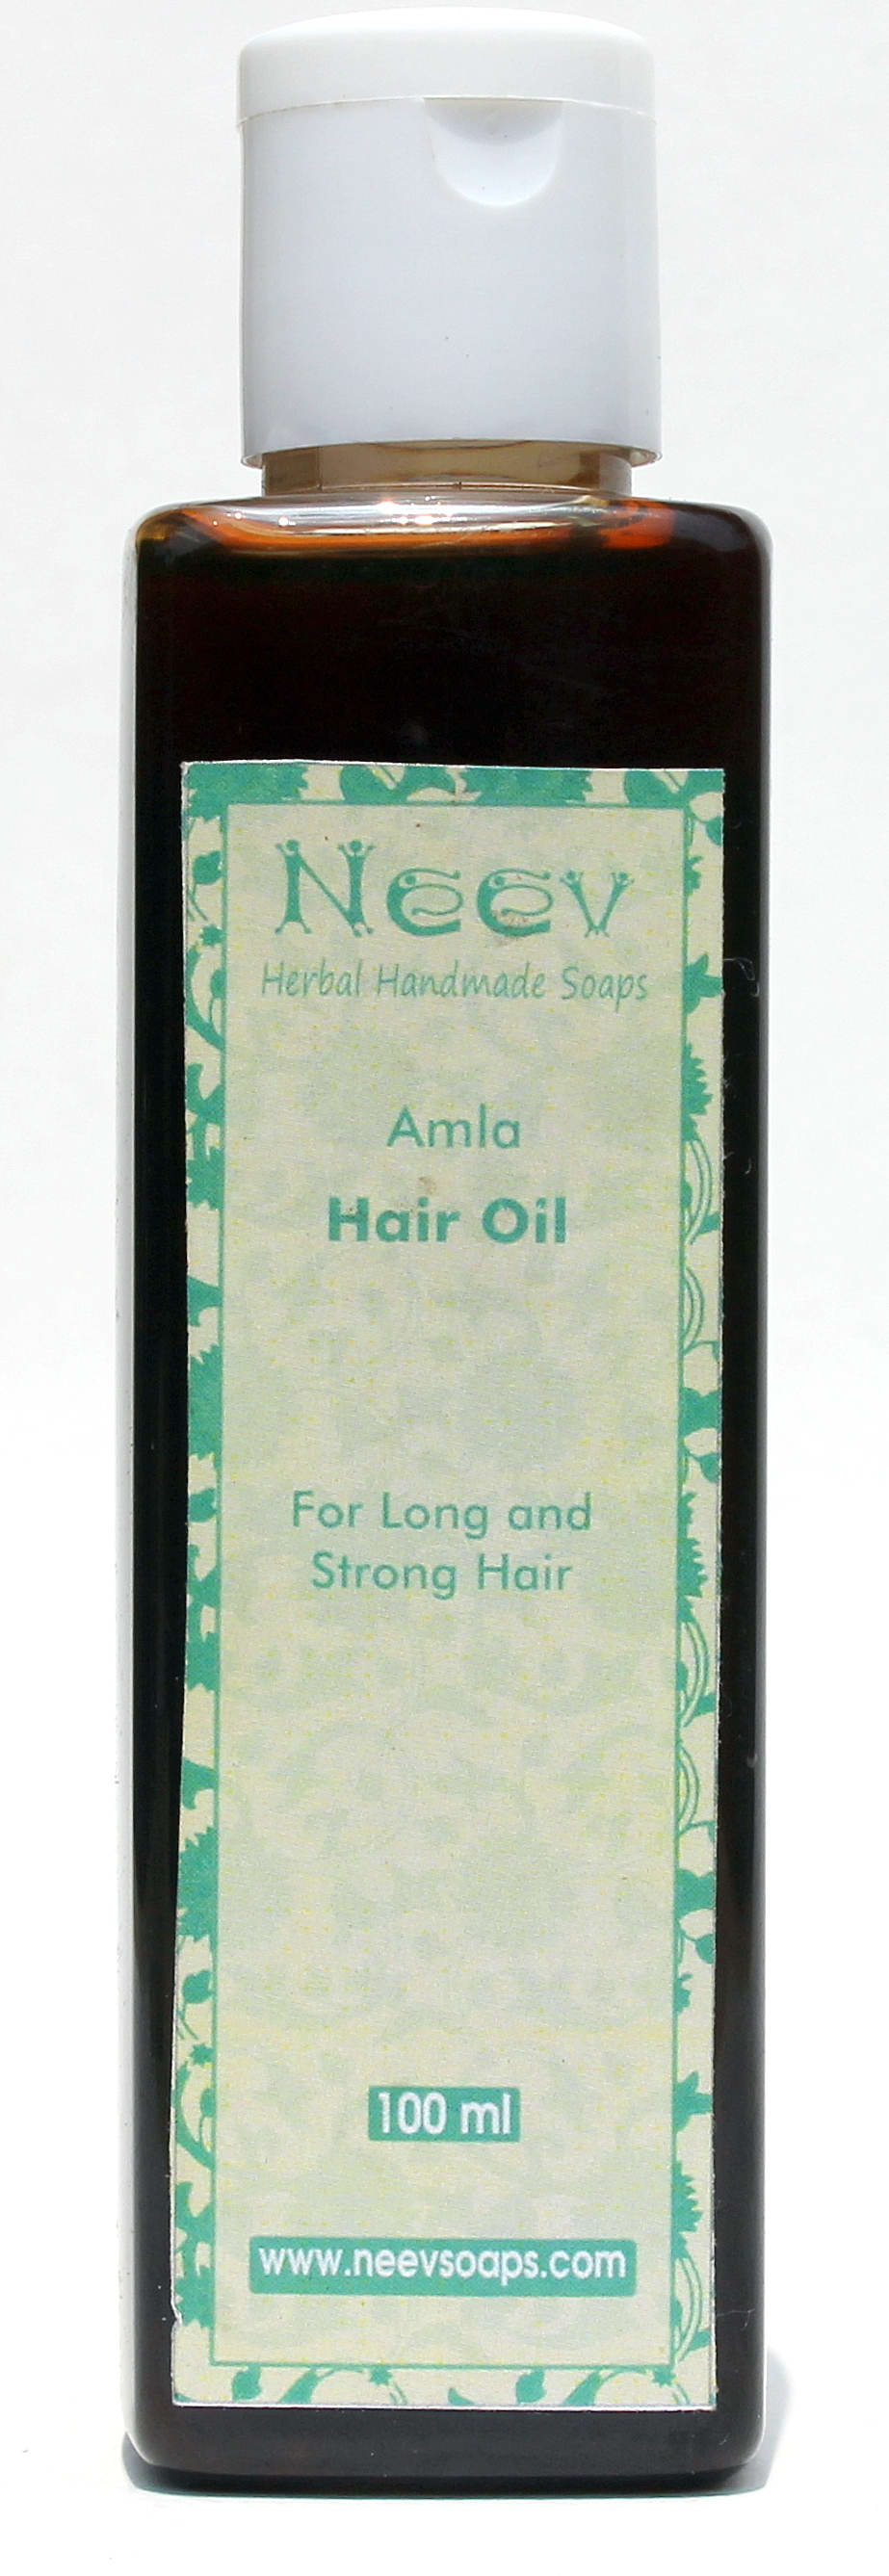 Amla Hair Oil For Long and Strong Hair